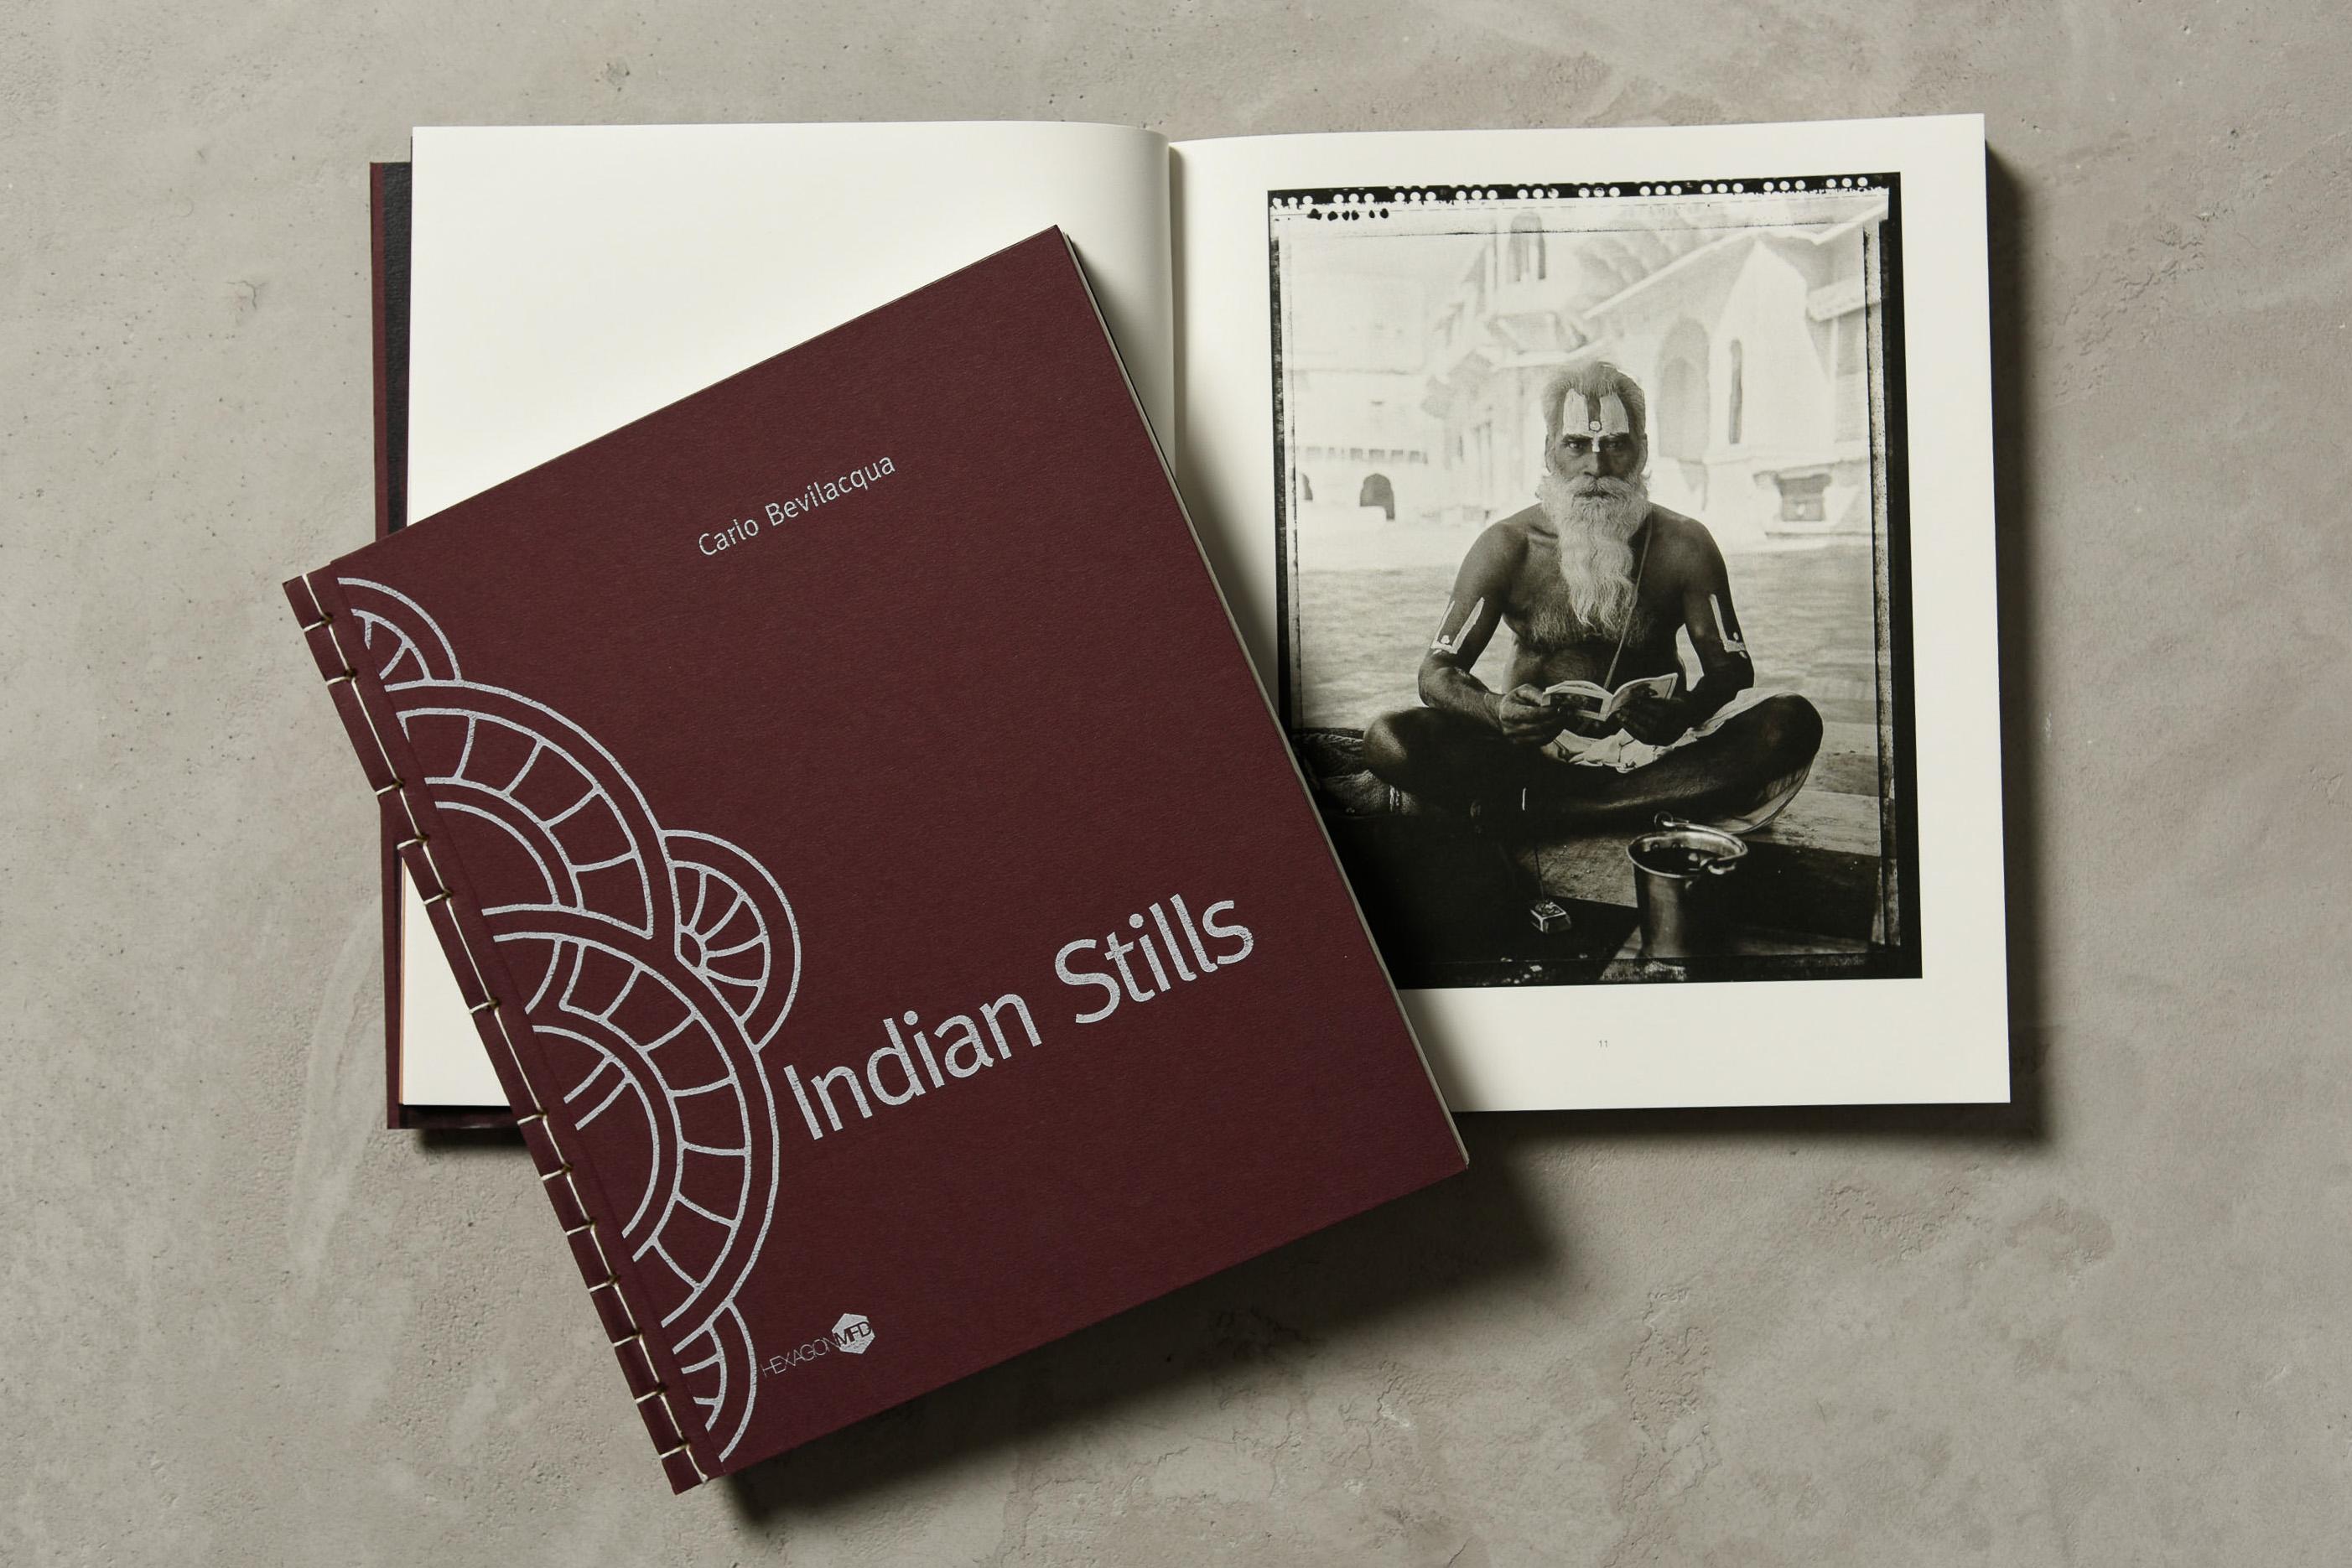 Carlo Bevilacqua Black and White Photograph - Indian Stills - Limited Edition Photo Book 